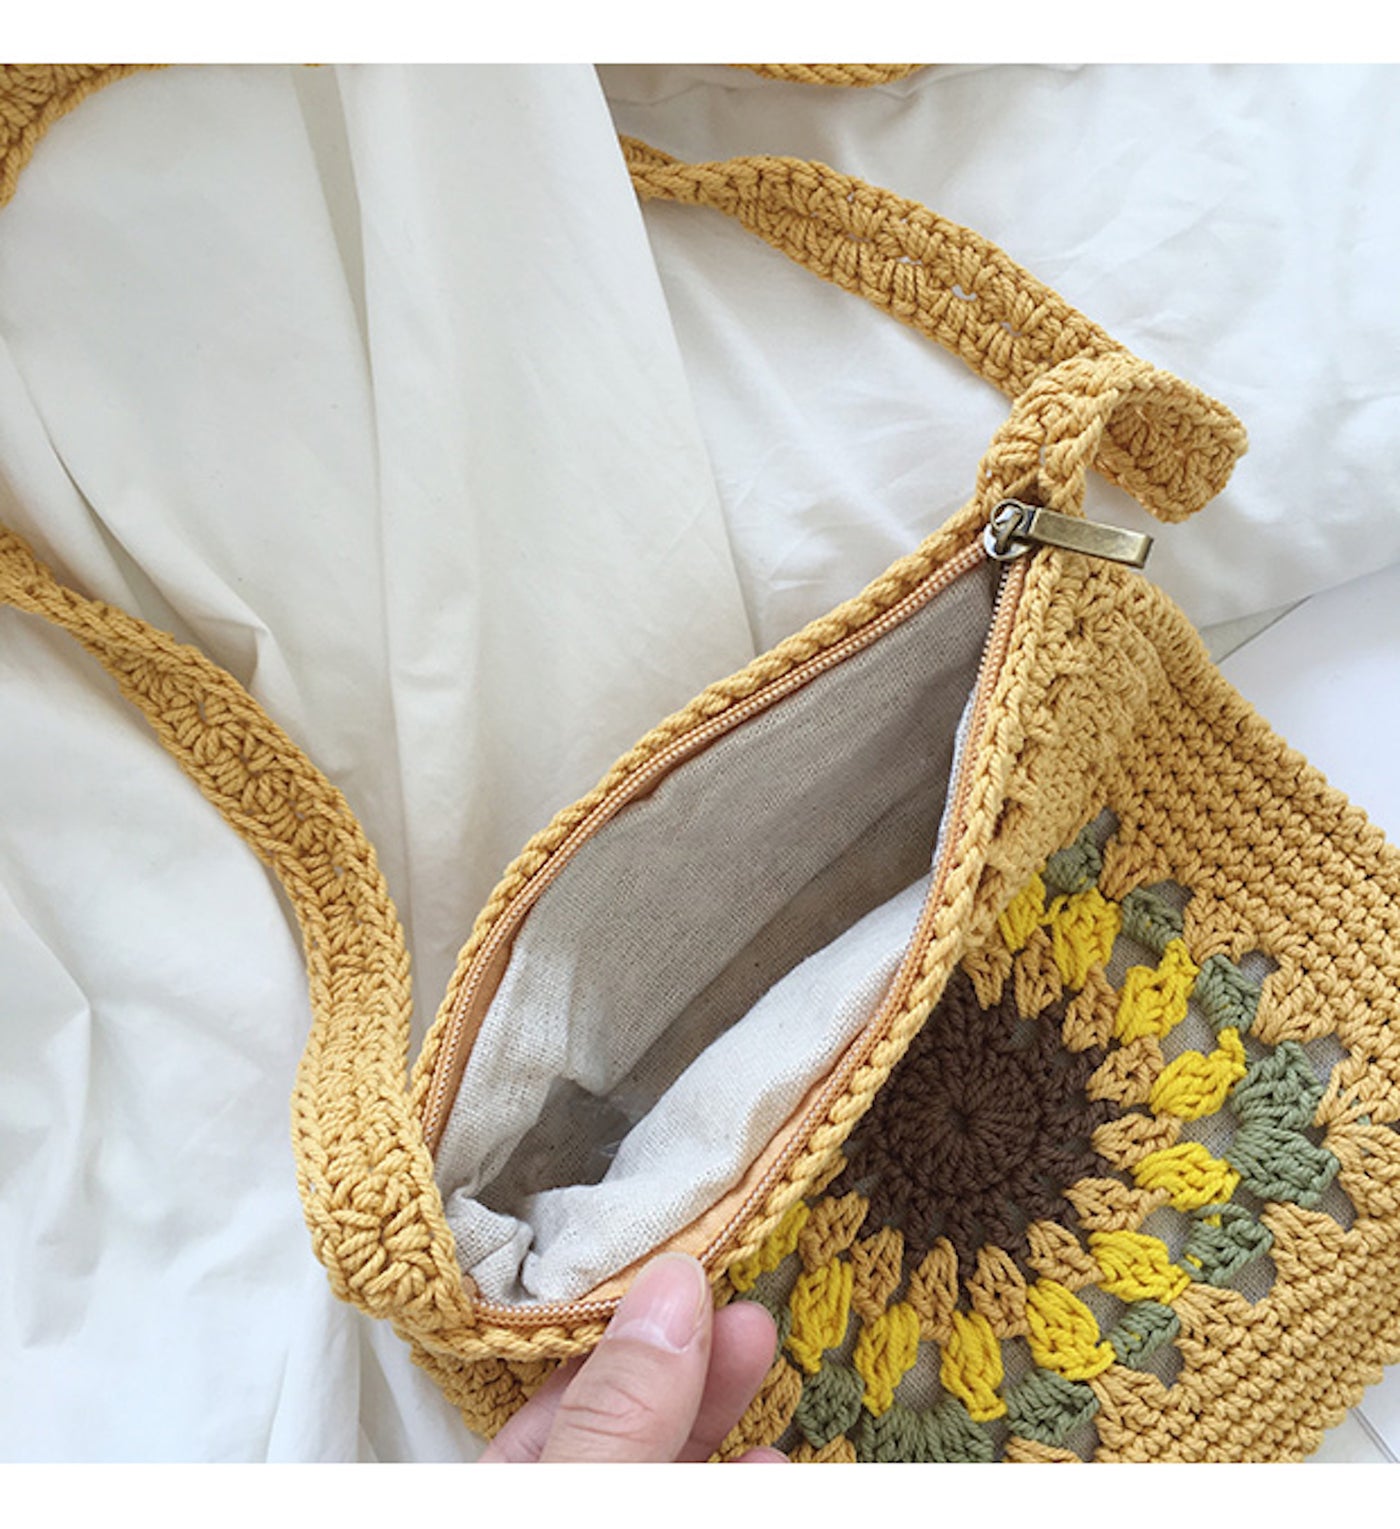 Cheerful Crochet Sunflower in Smiling Red Pot - Buy ladies bag